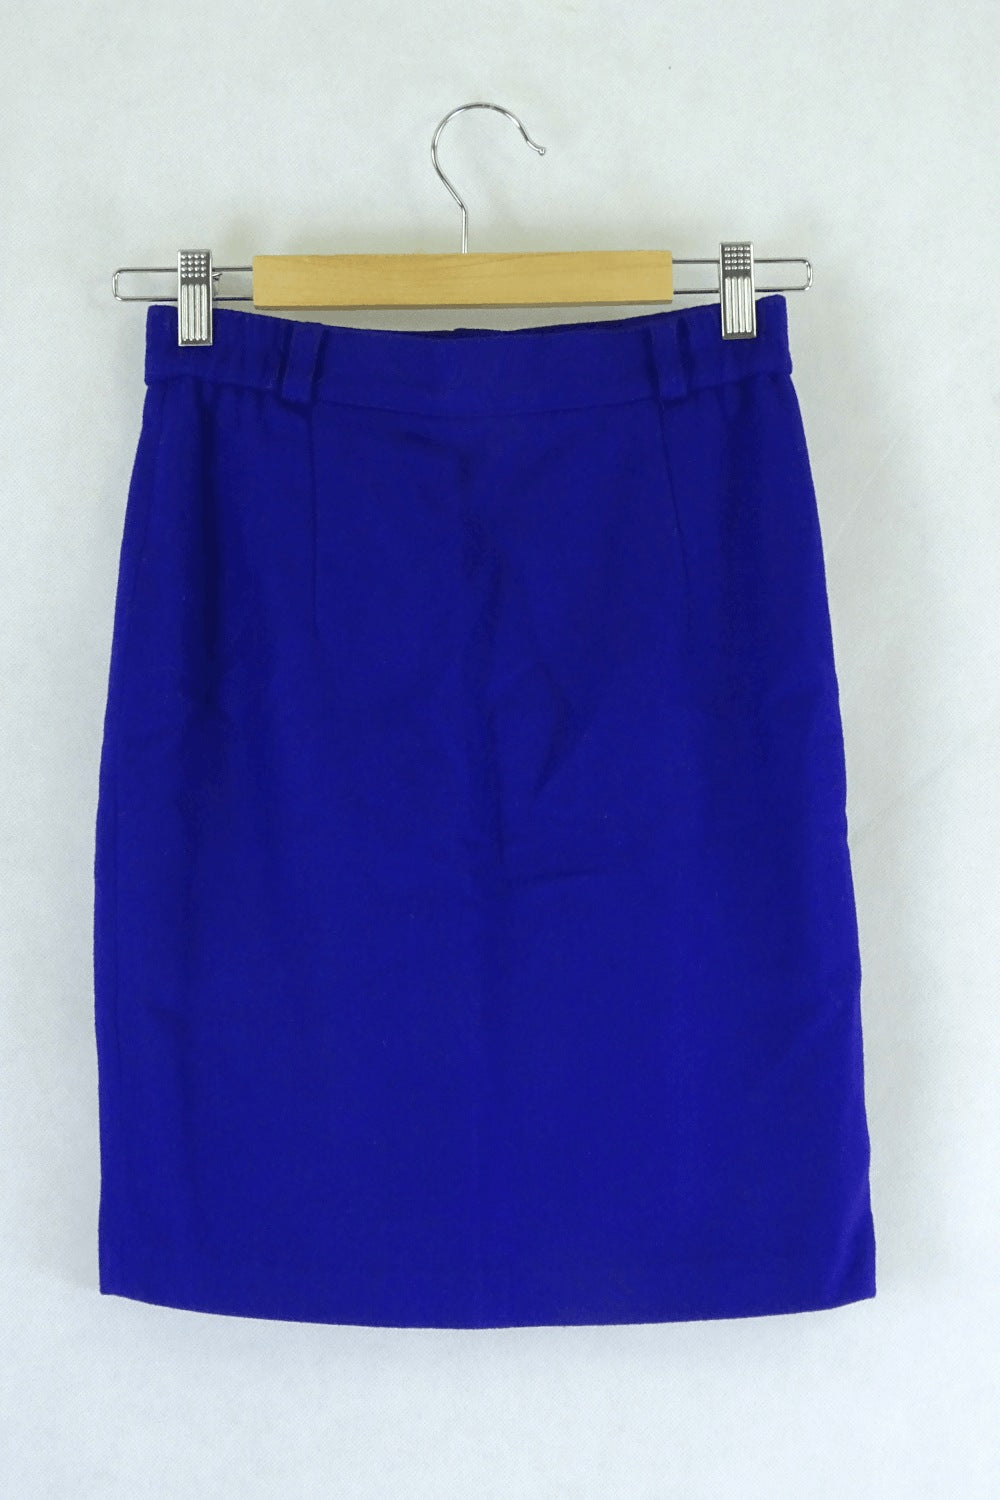 Wanko Fashion Purple Skirt S